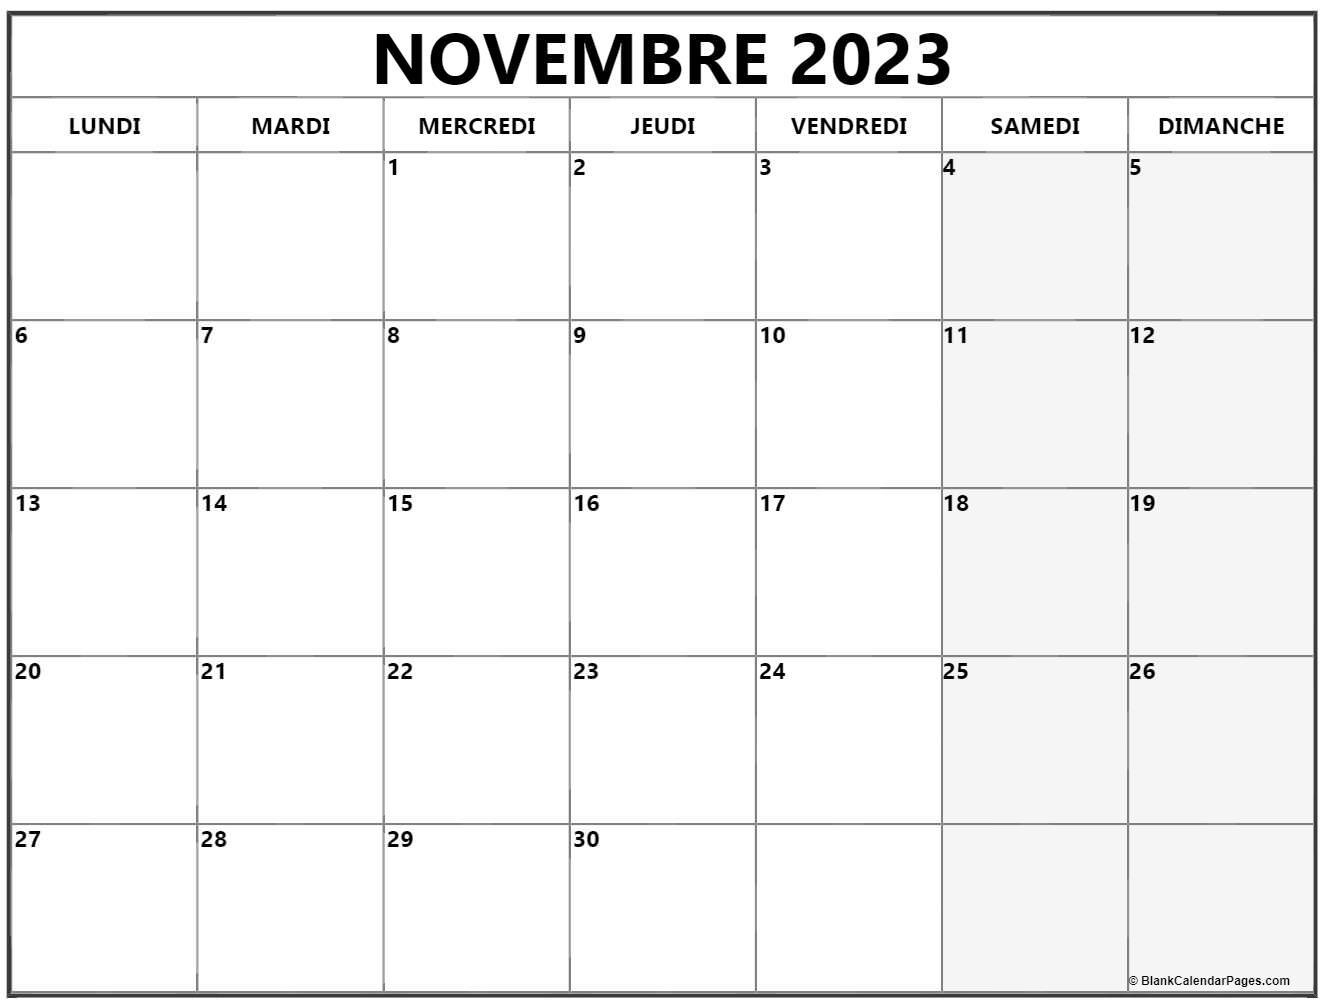 Calendrier Novembre 2023 à consulter ou imprimer 